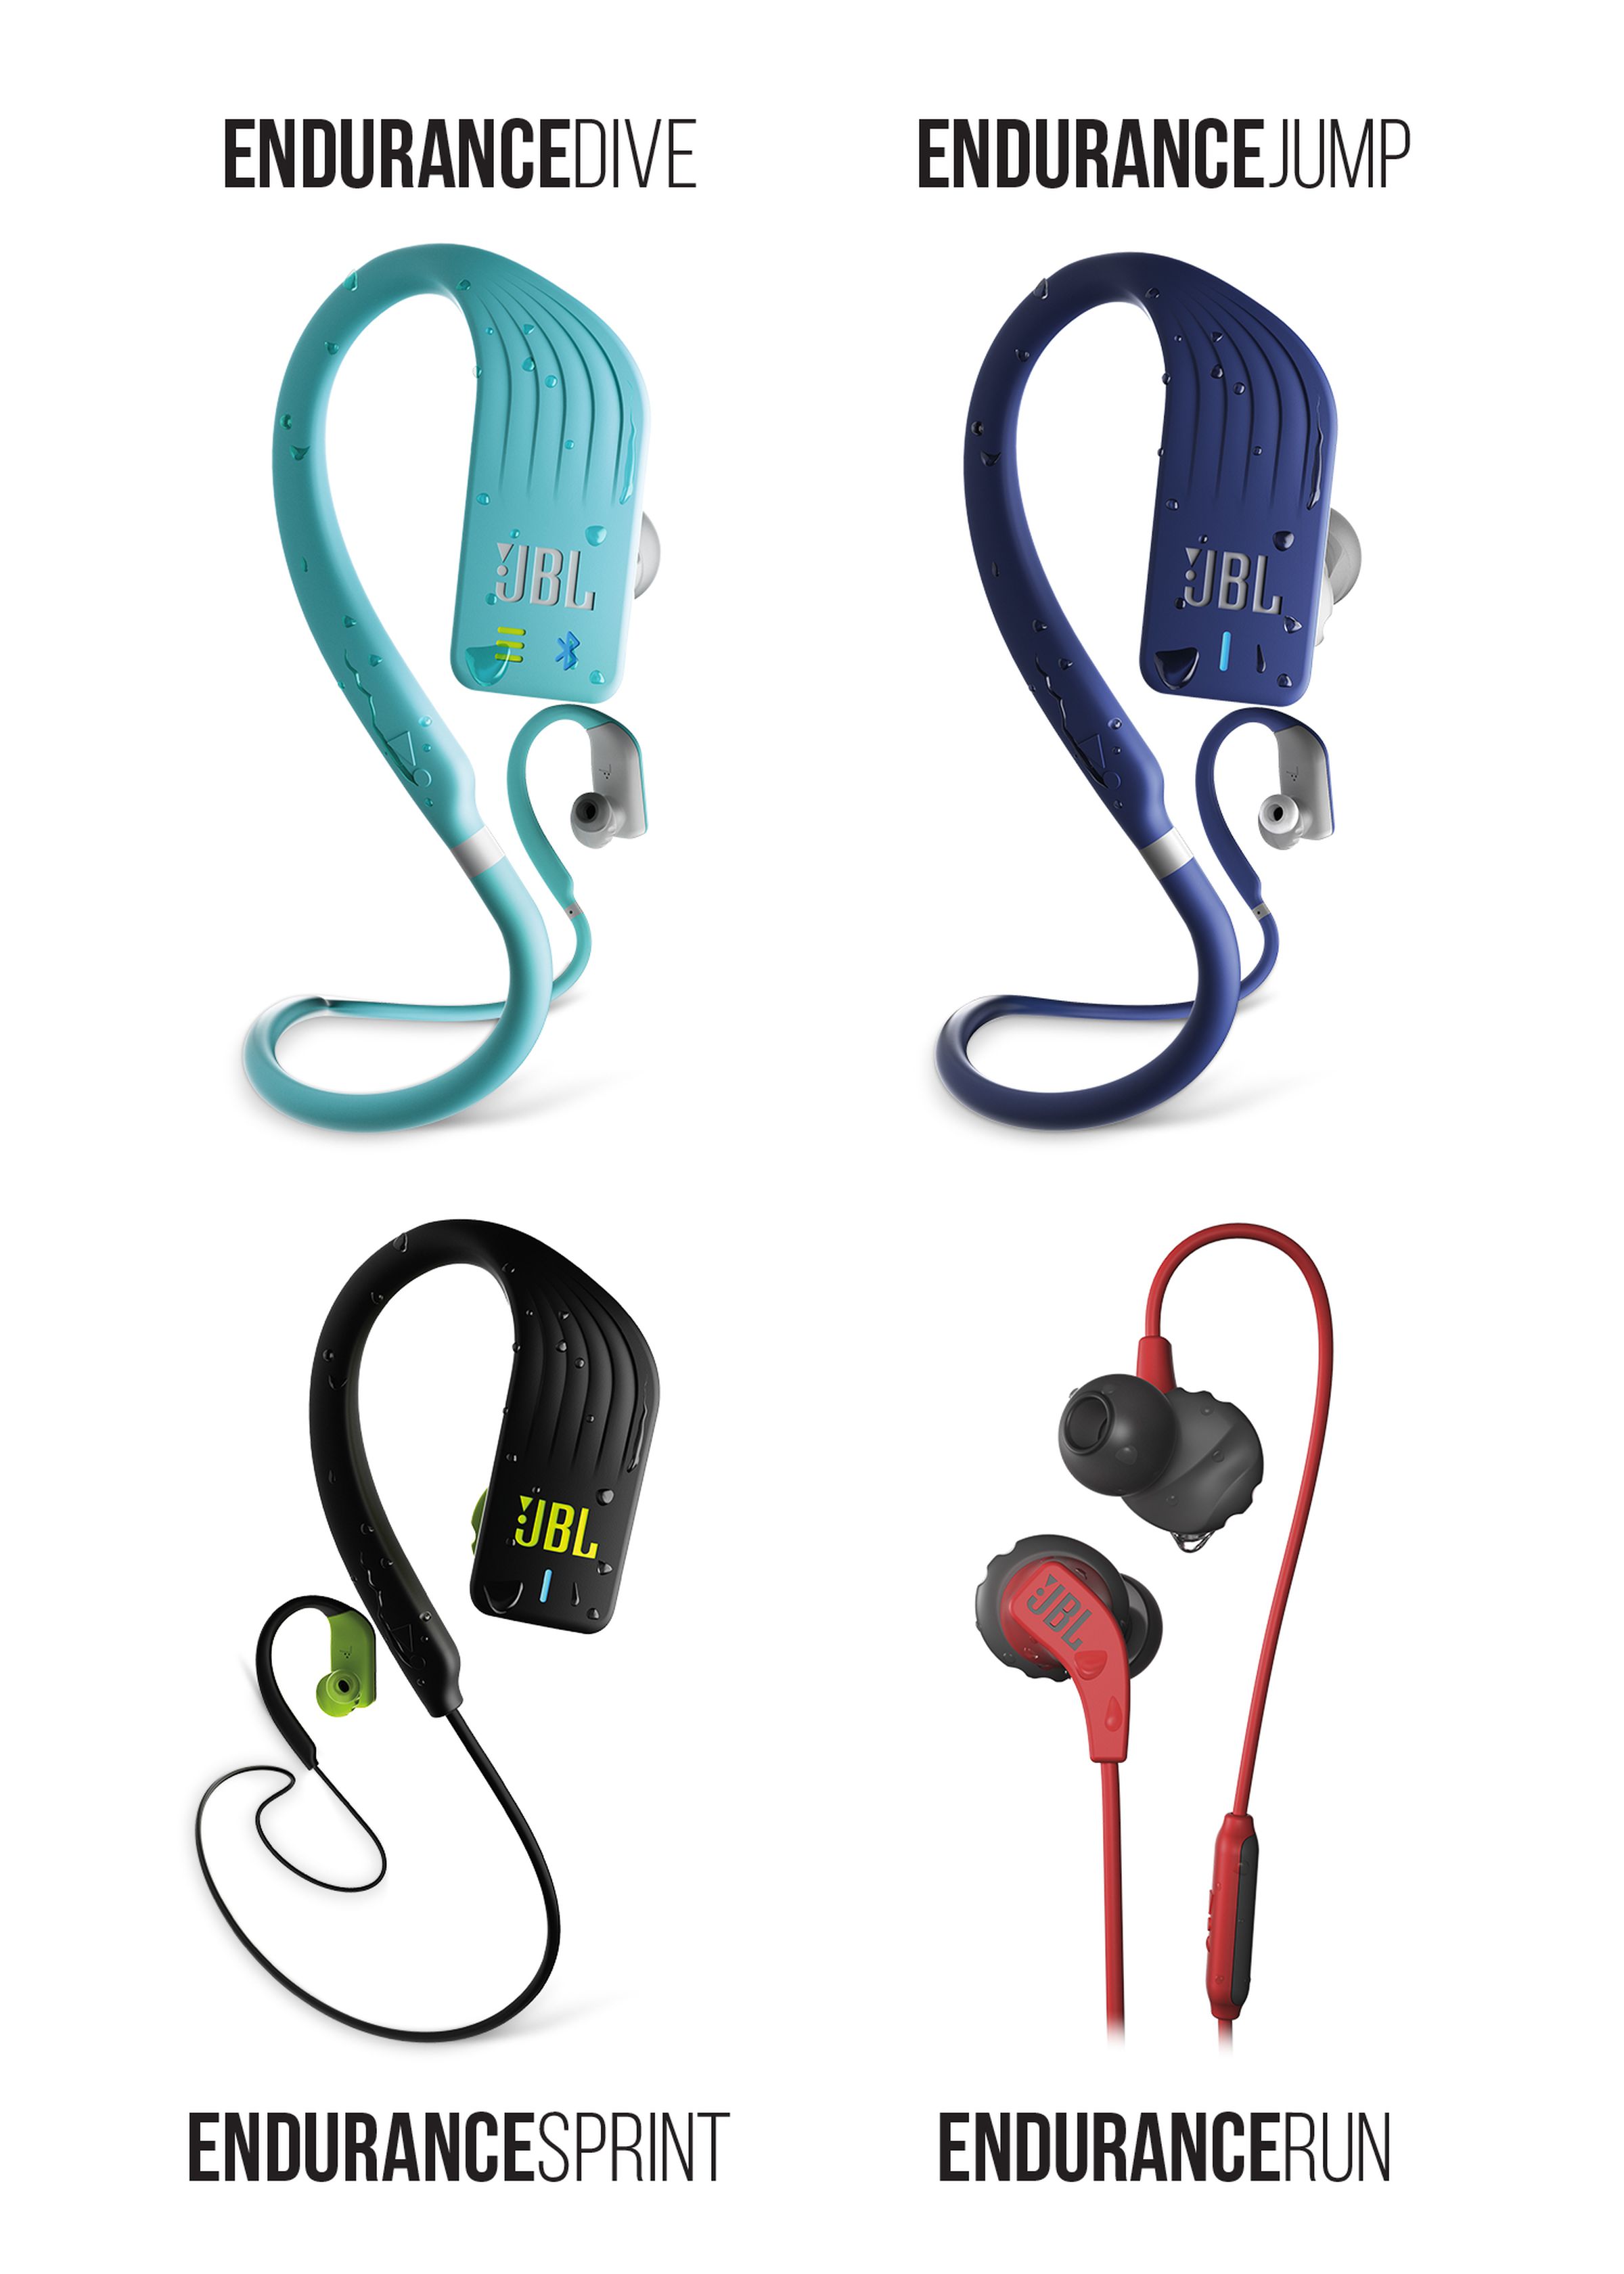 Endurance sport earphones.